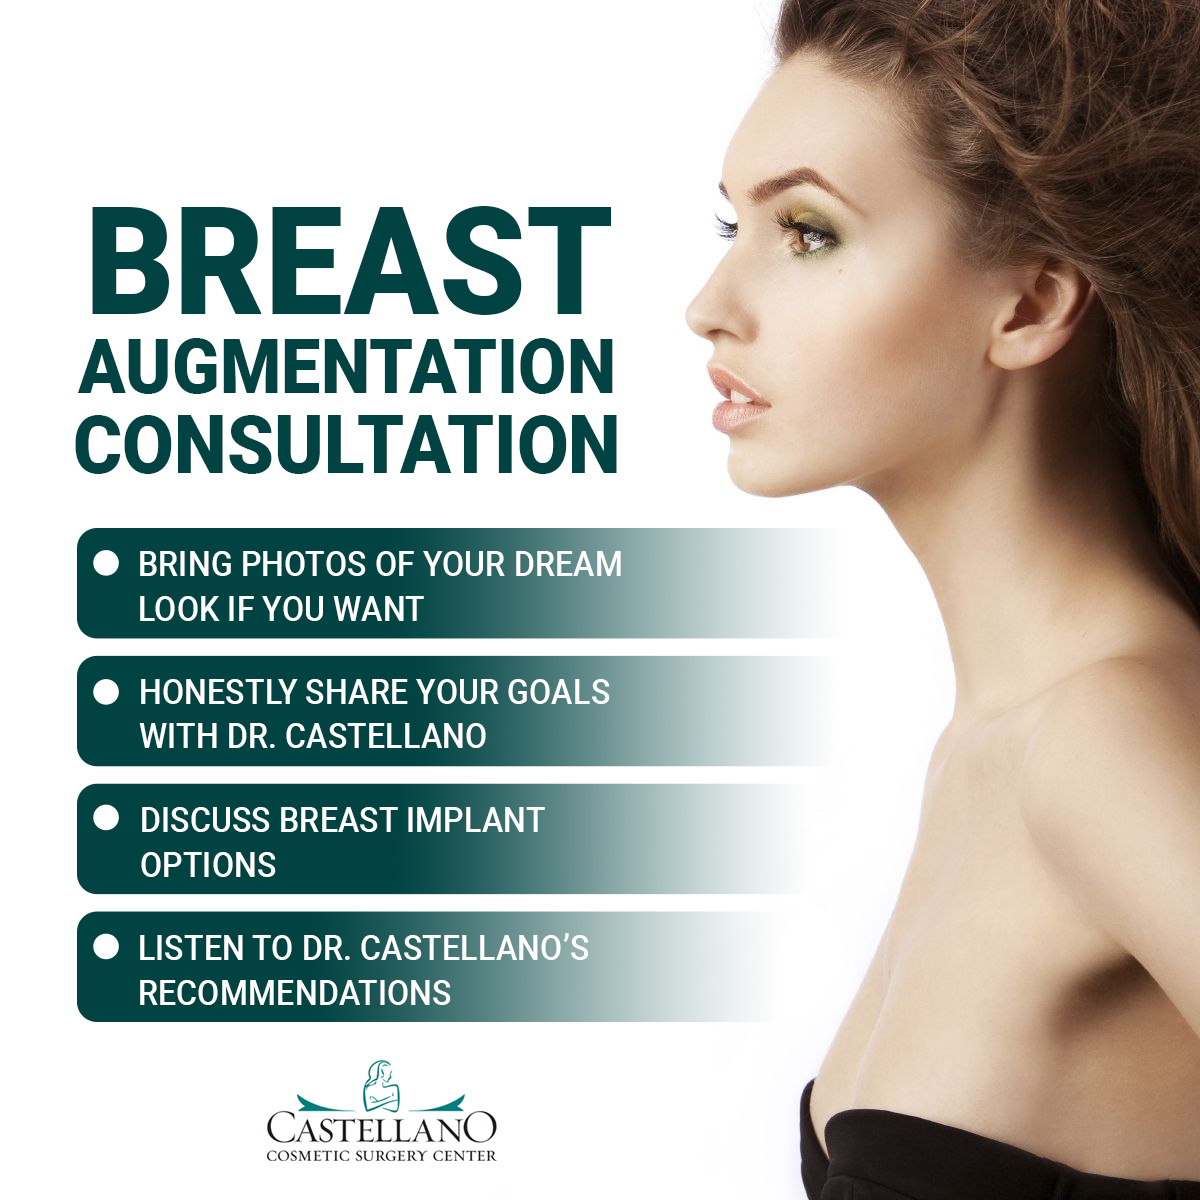 Breast Augmentation Consultation [Infographic] img 1